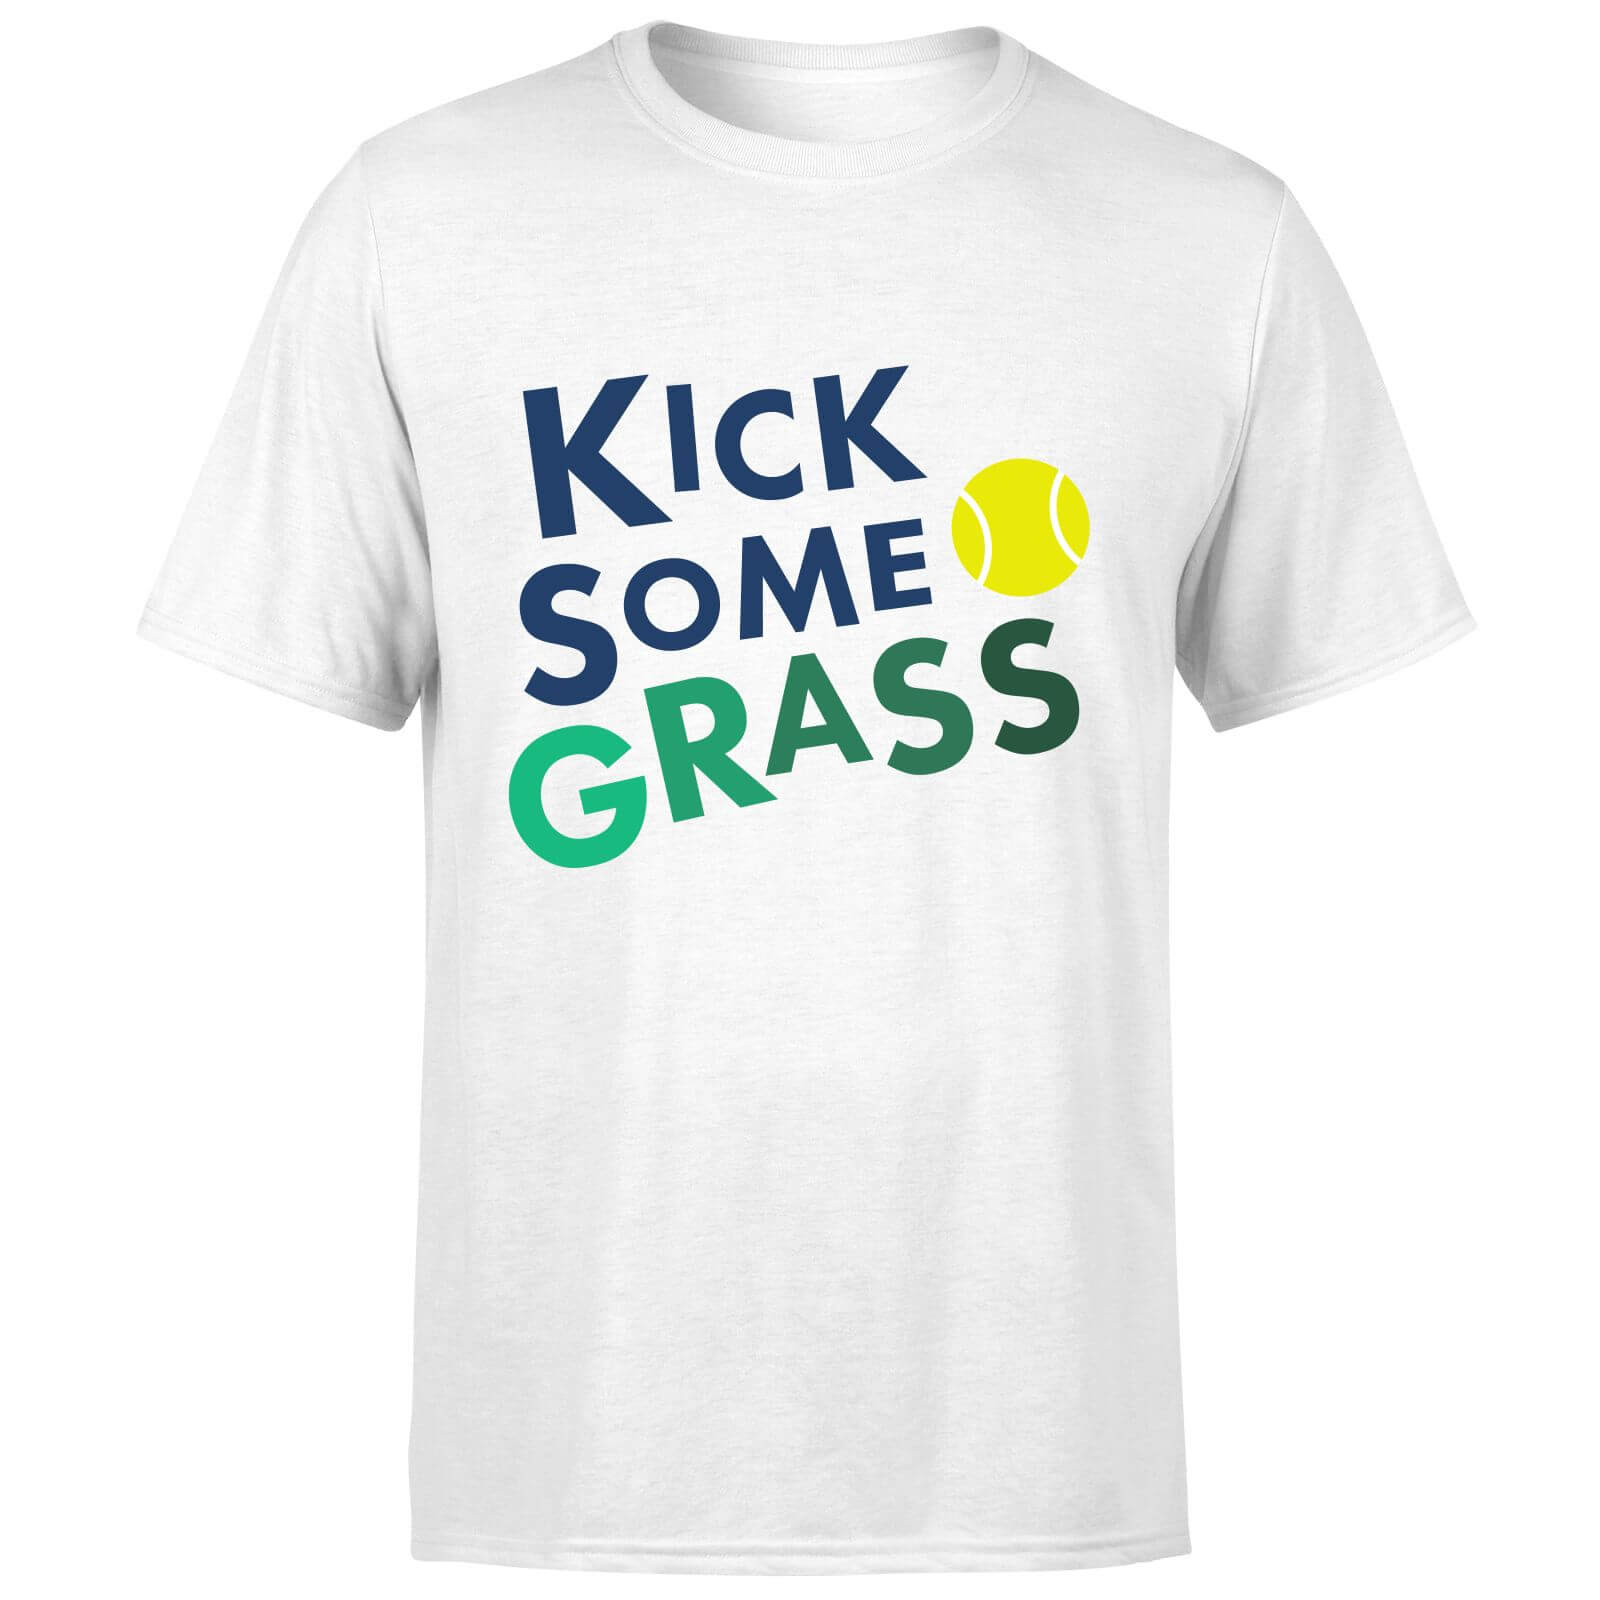 Kick Some Grass T-Shirt - White - XL - White